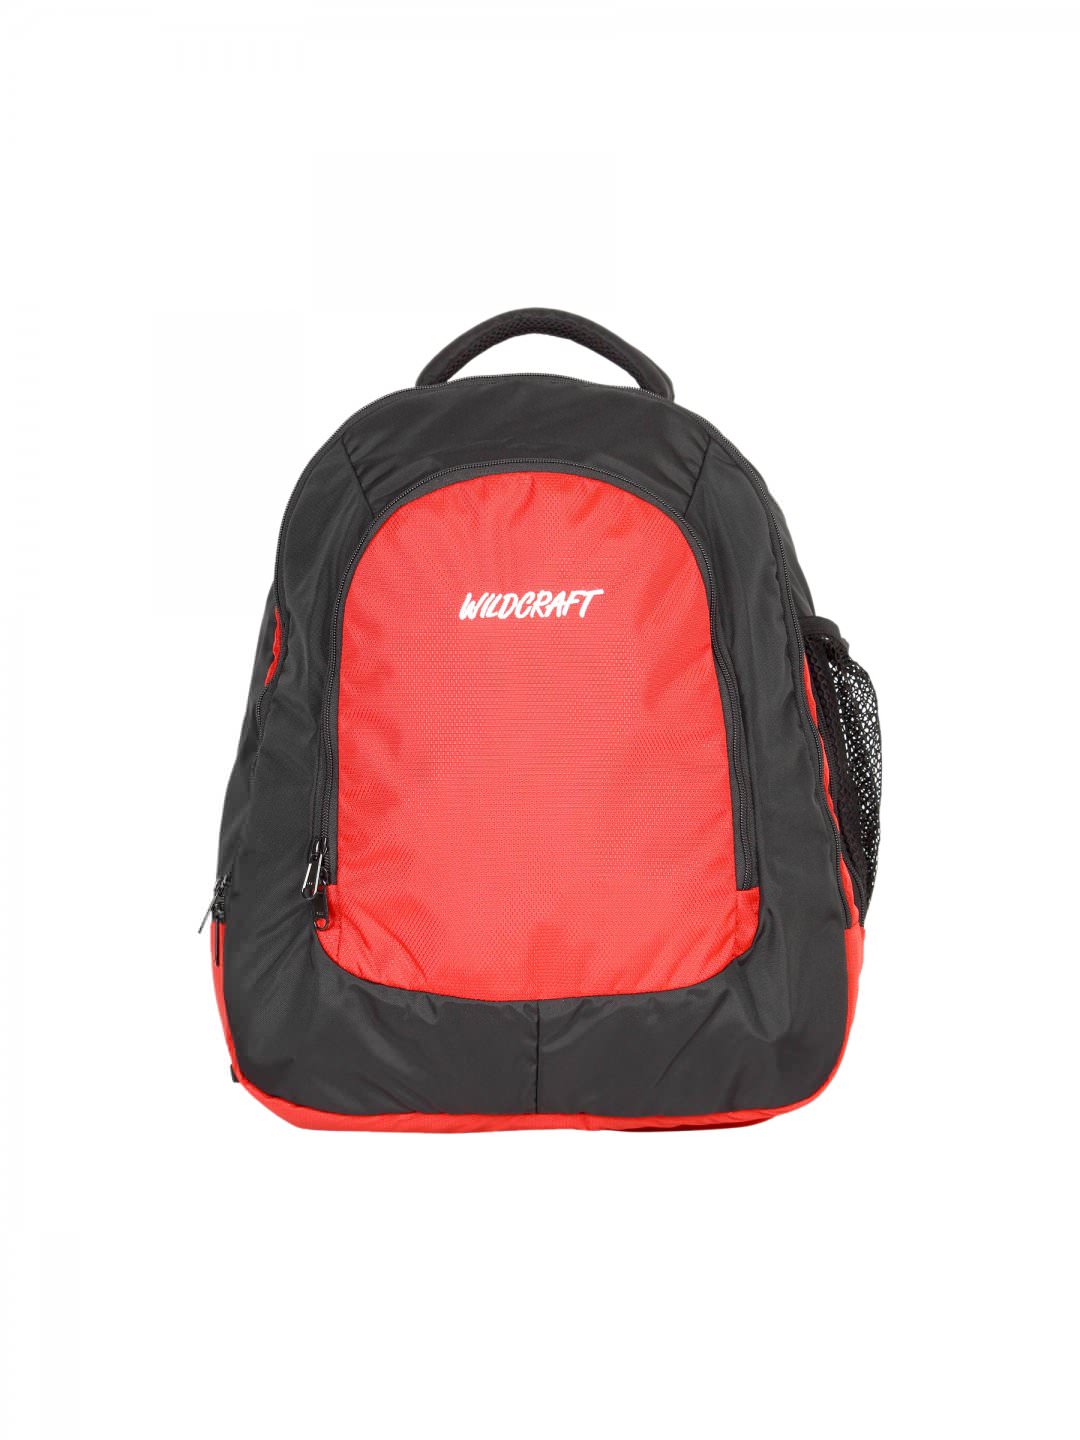 Wildcraft Unisex Corporate Red Backpack